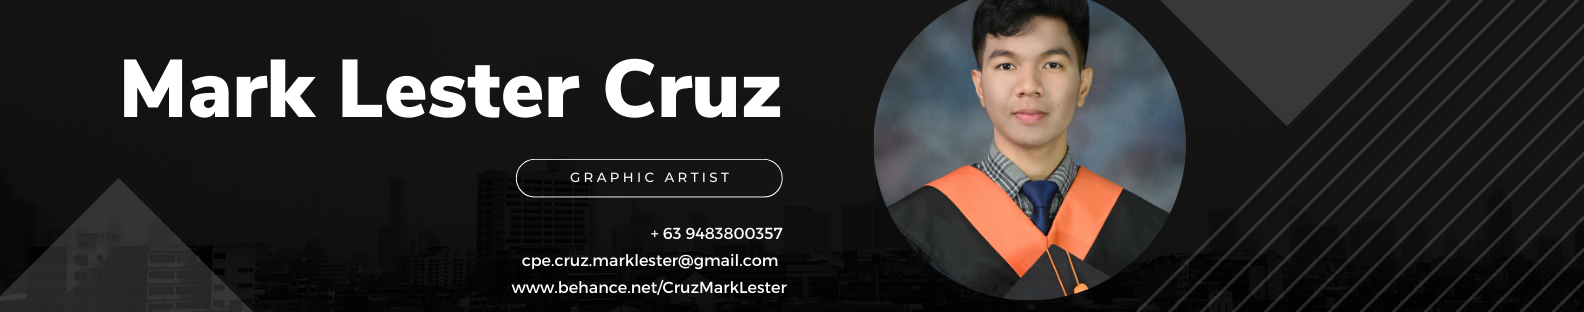 Cruz, Mark Lester T.'s profile banner